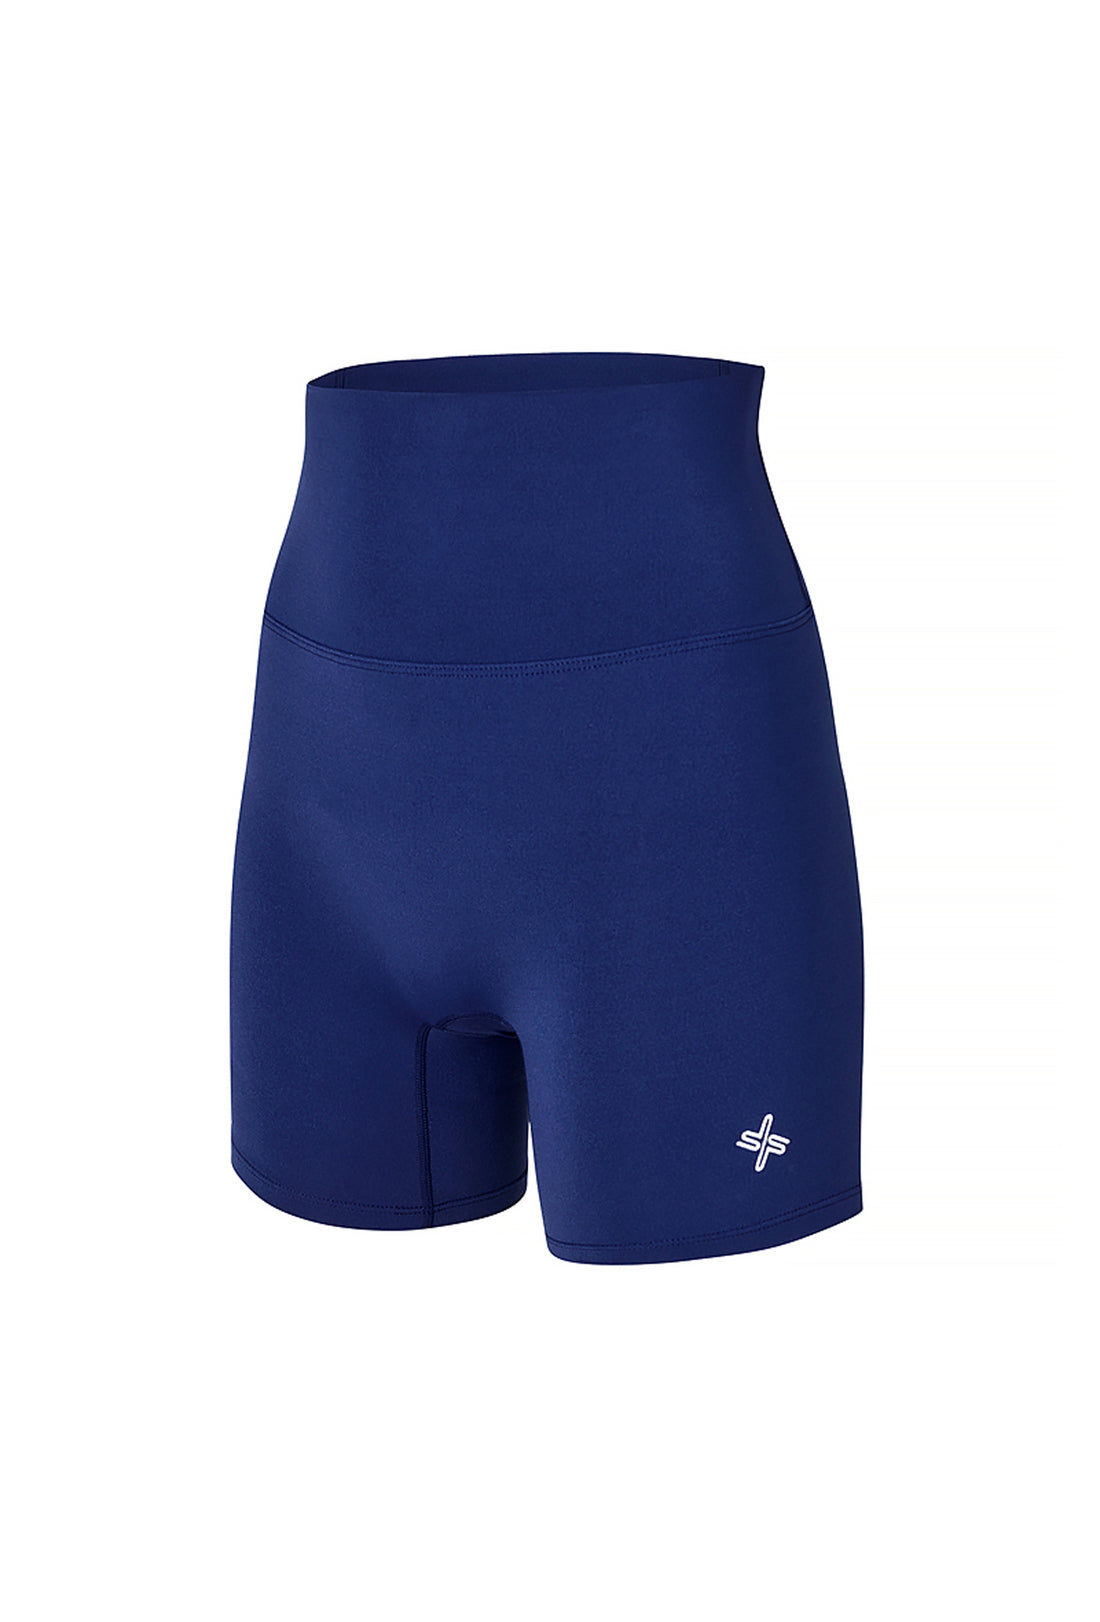 XELLA Intention Biker Shorts 3.5 - Iris Blue